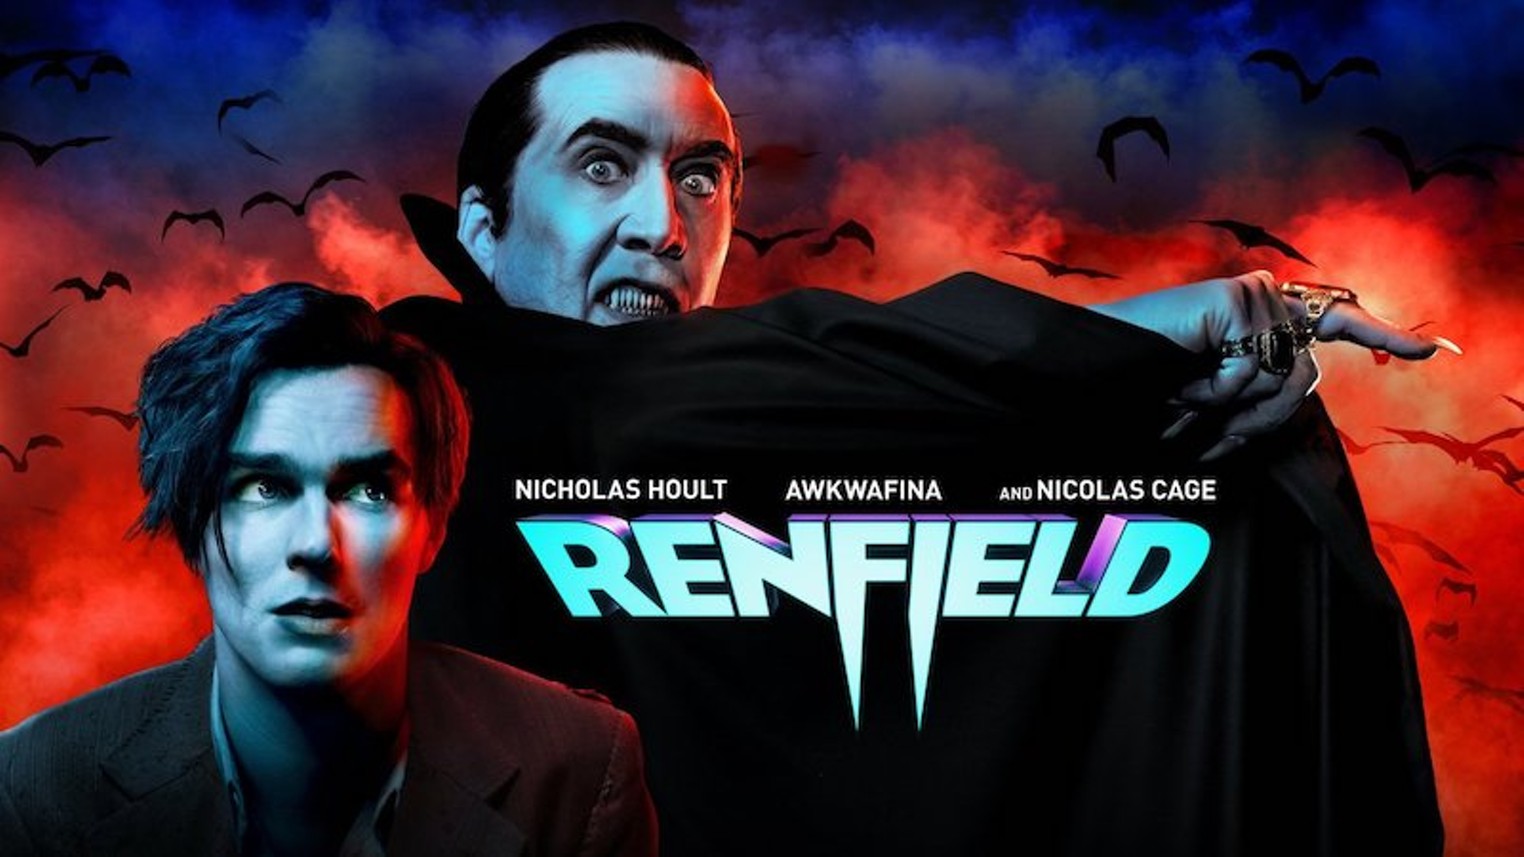 Renfield (film) - Wikipedia